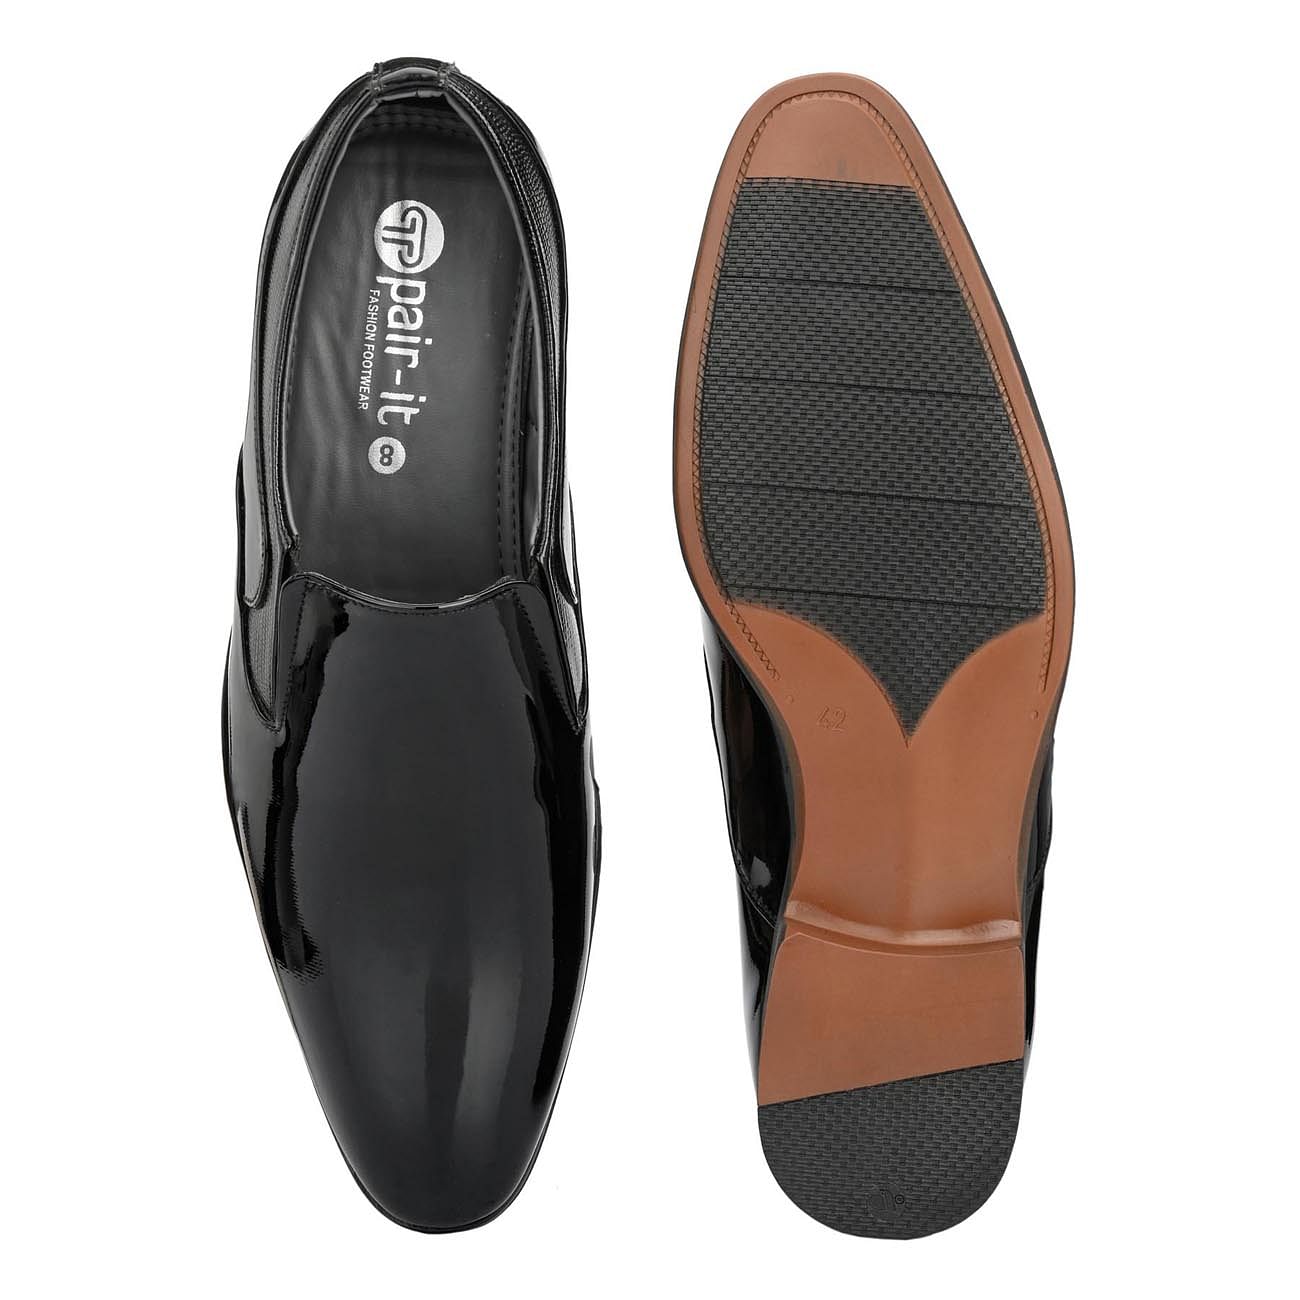 Pair-it Men's Slip-On Formal Shoes - Black- LZ-T-FORMAL110